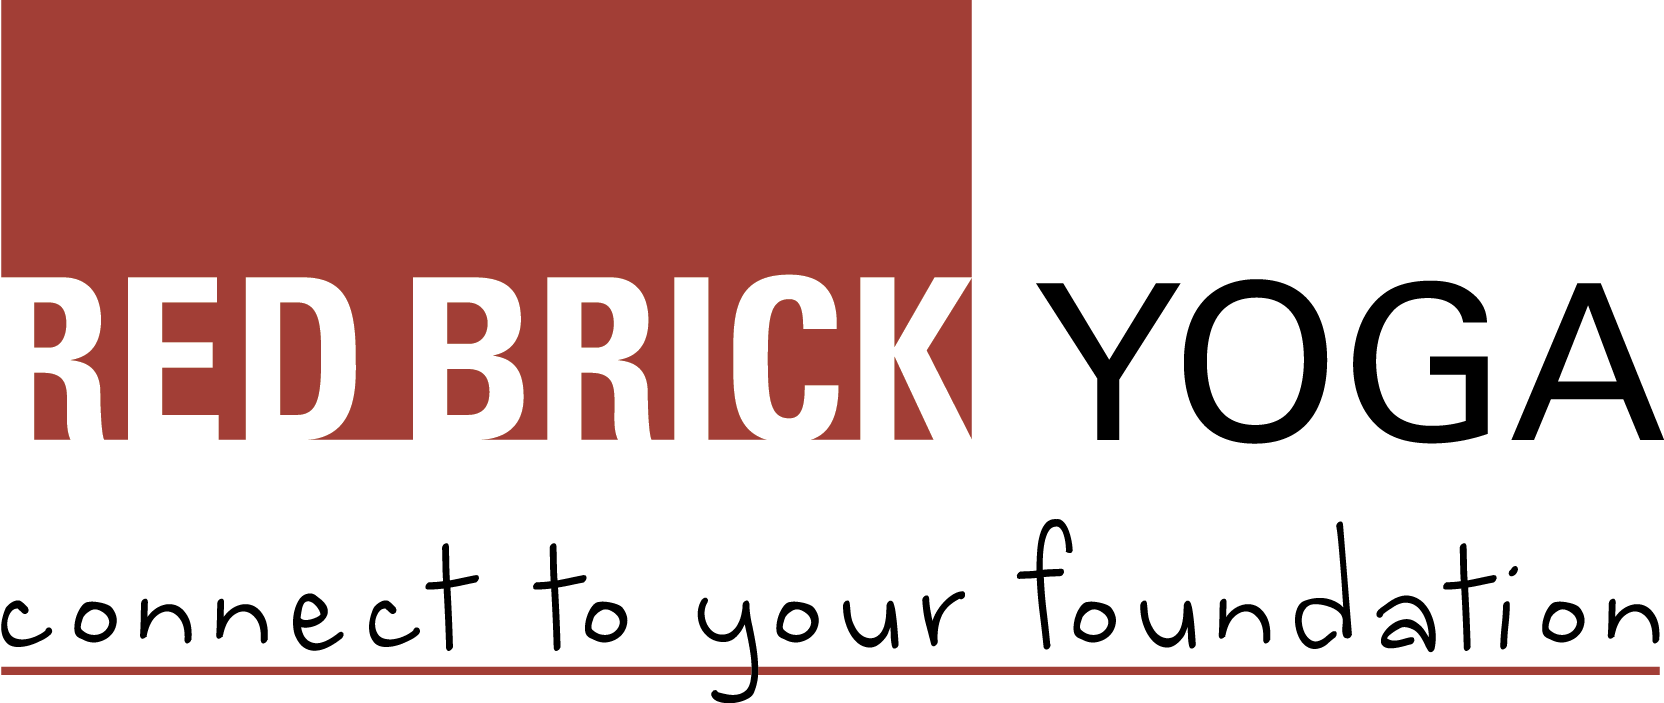 Red Brick Yoga